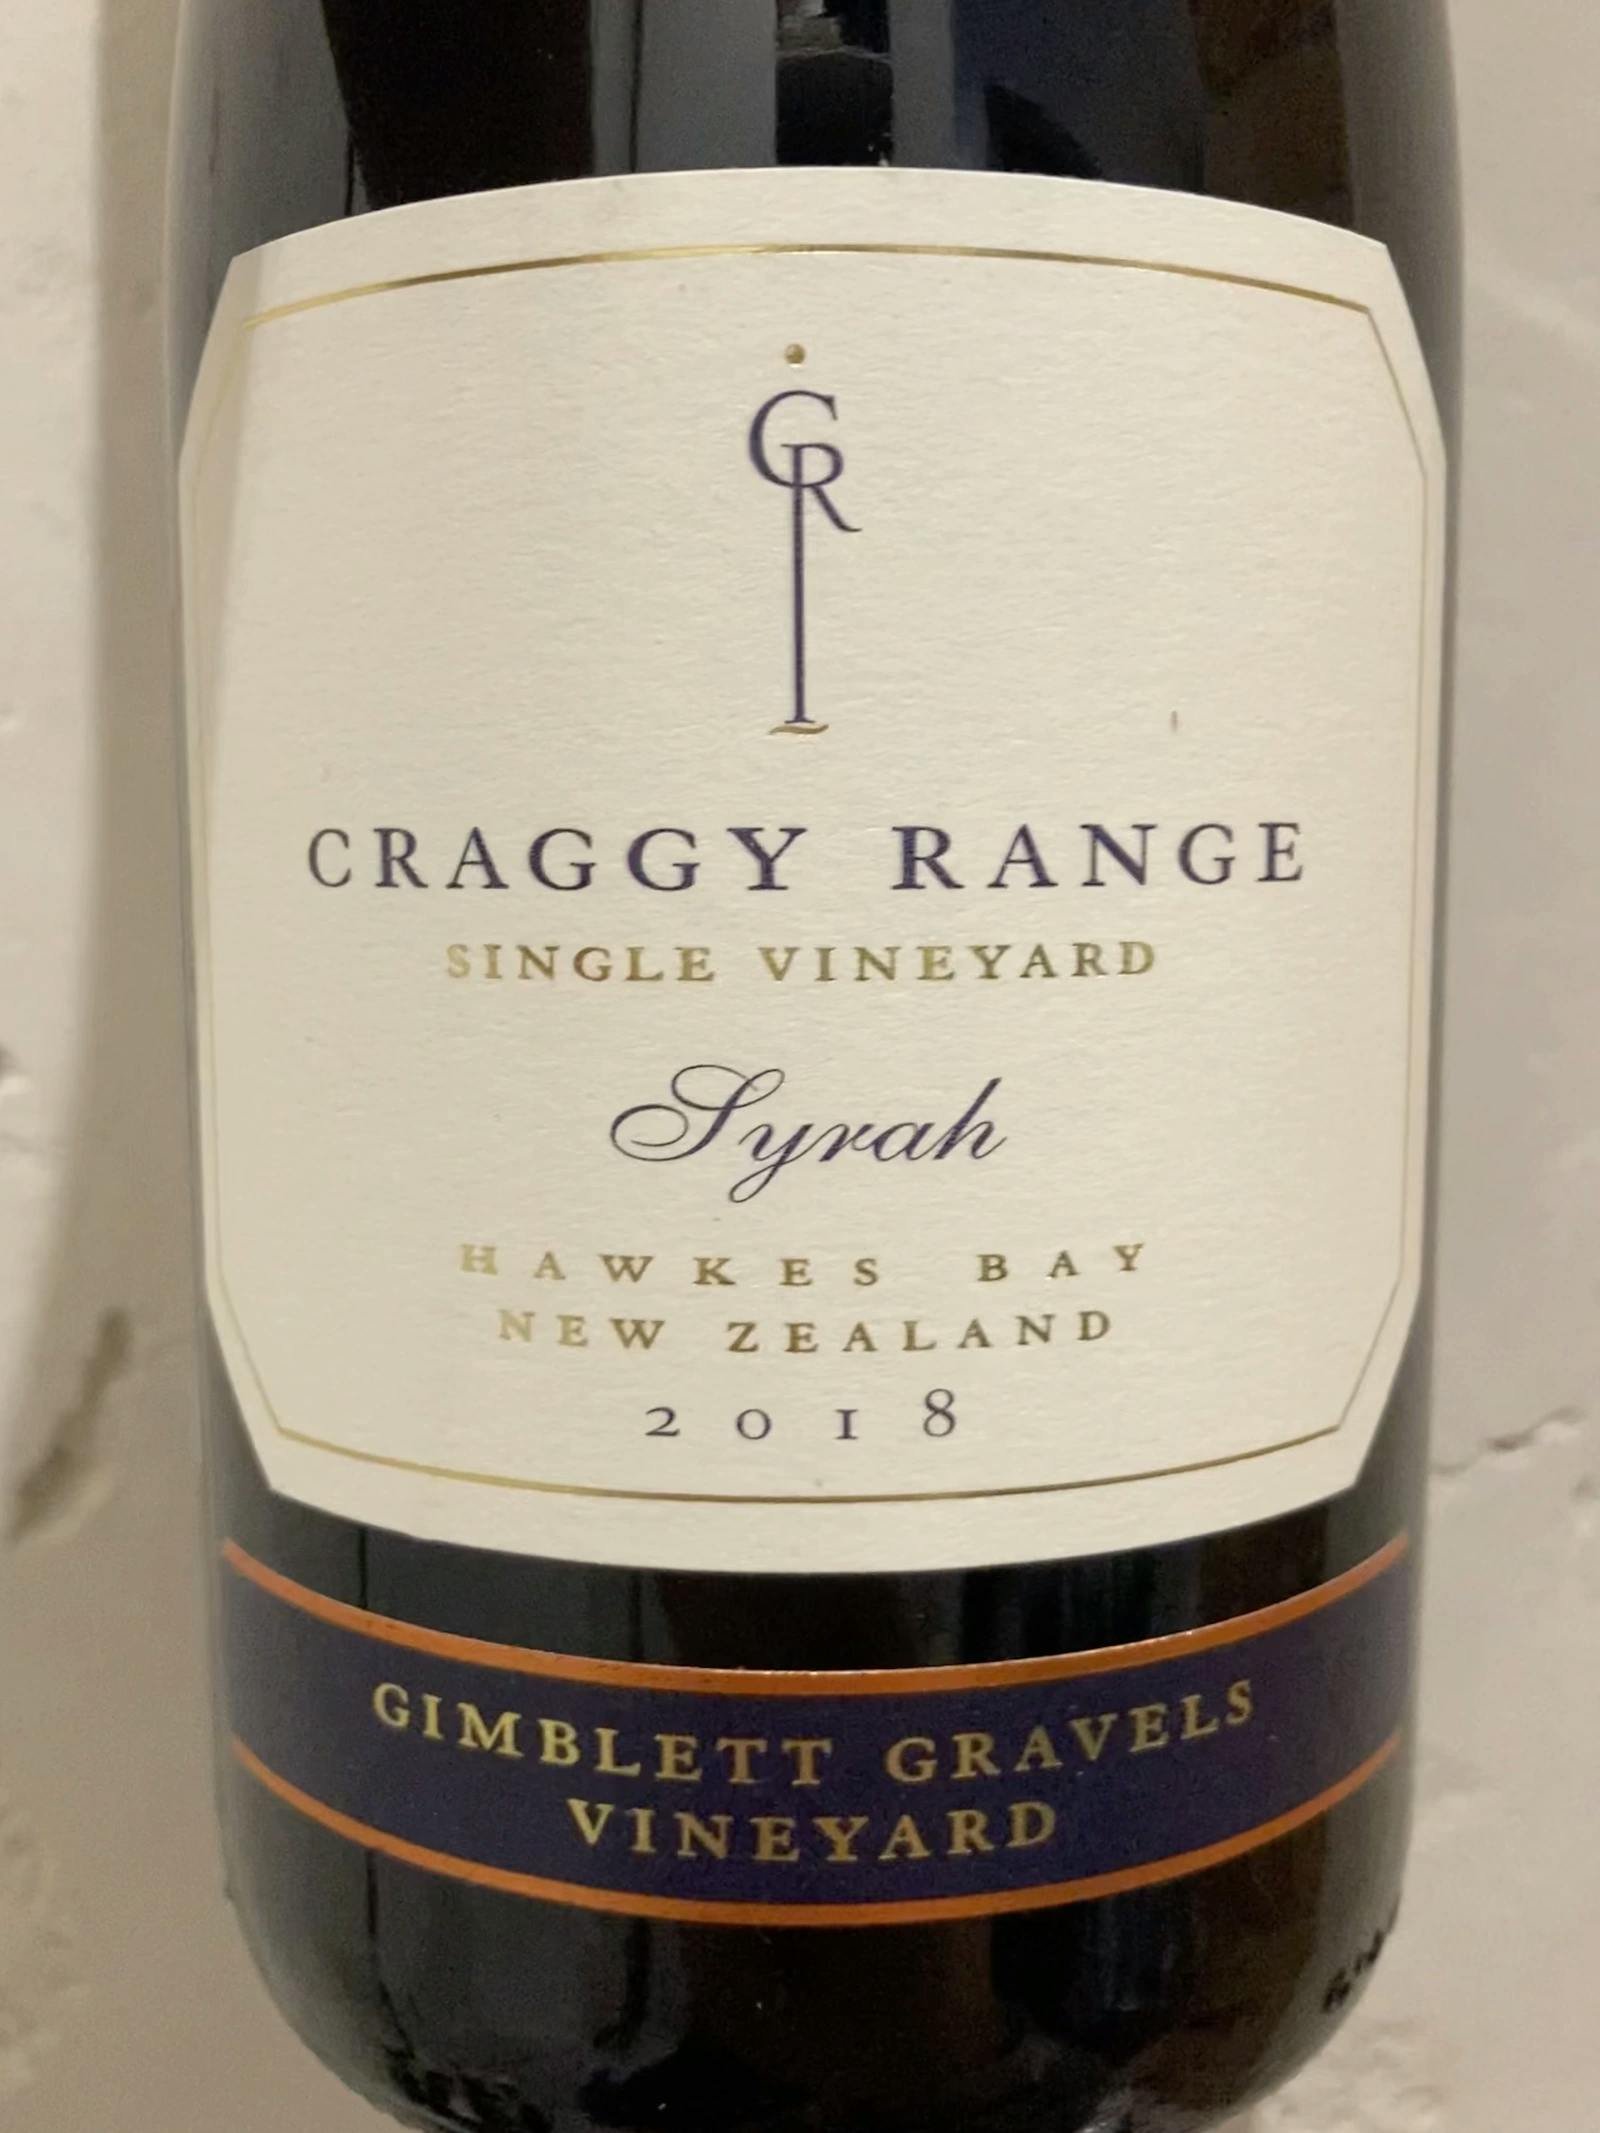 Craggy Range Gimblett Gravels Syrah 2018